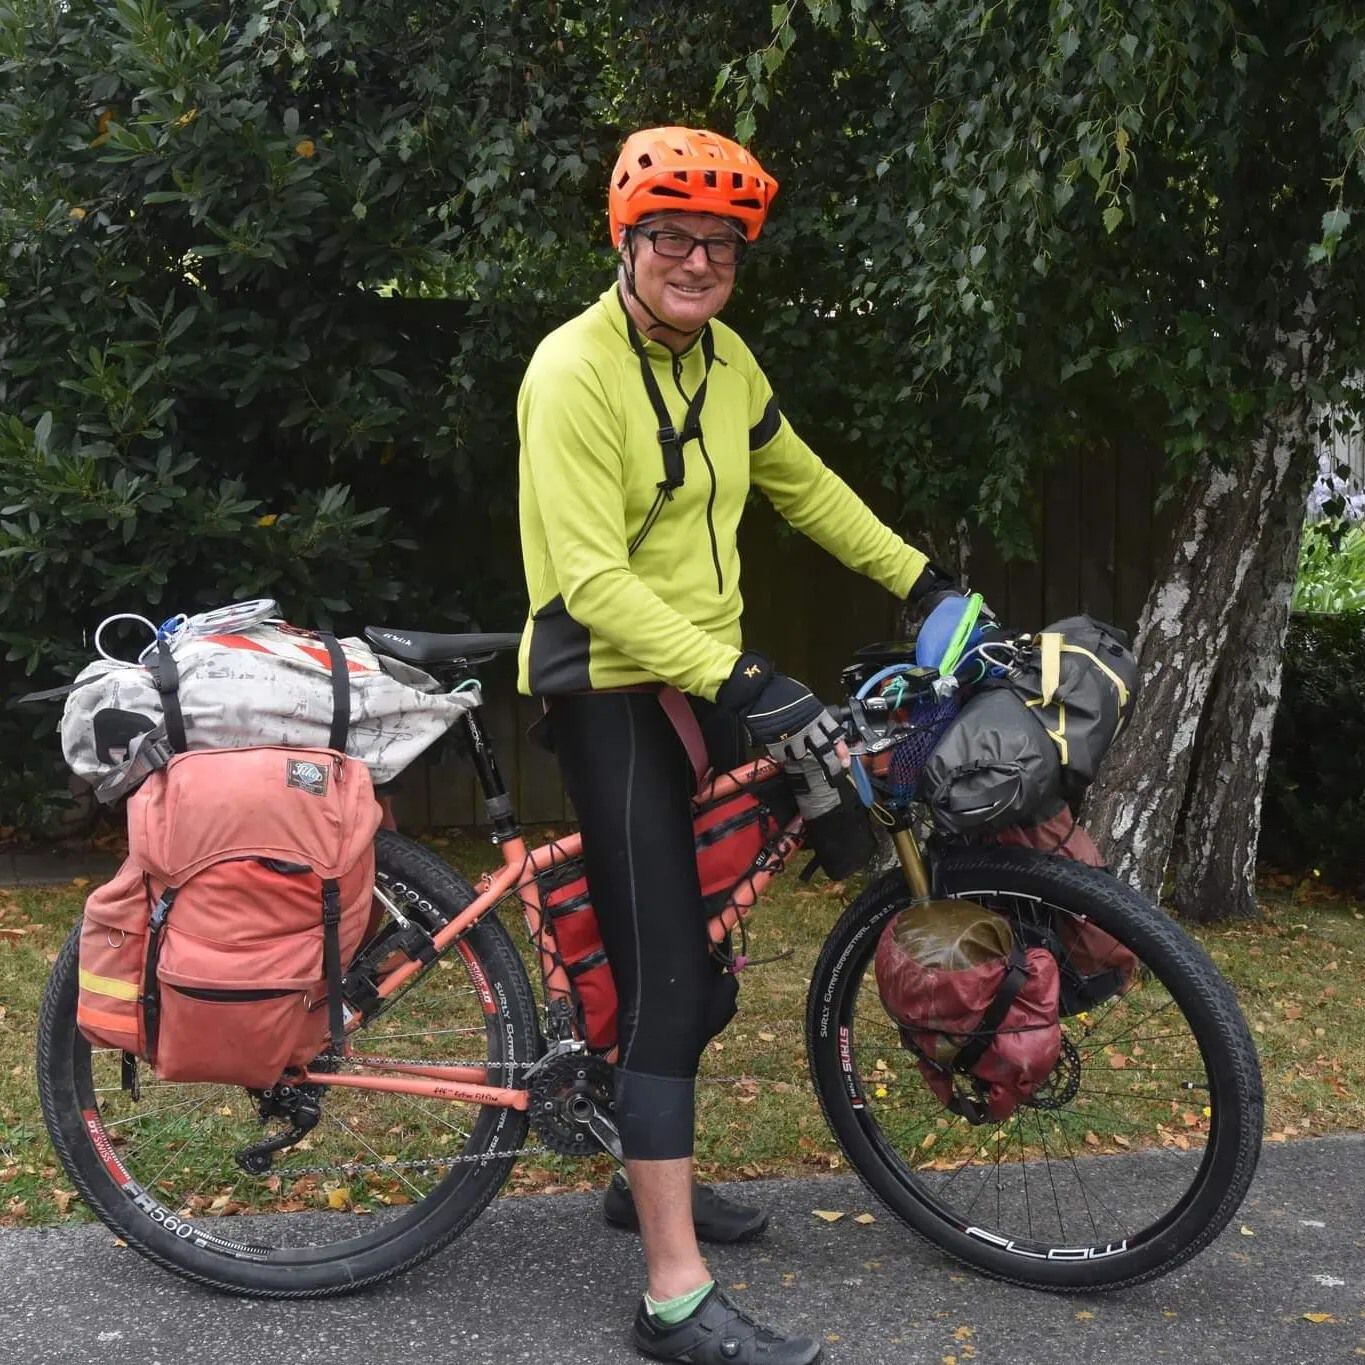 lindsay gault undertaking an 11,000km fundraising bike ride